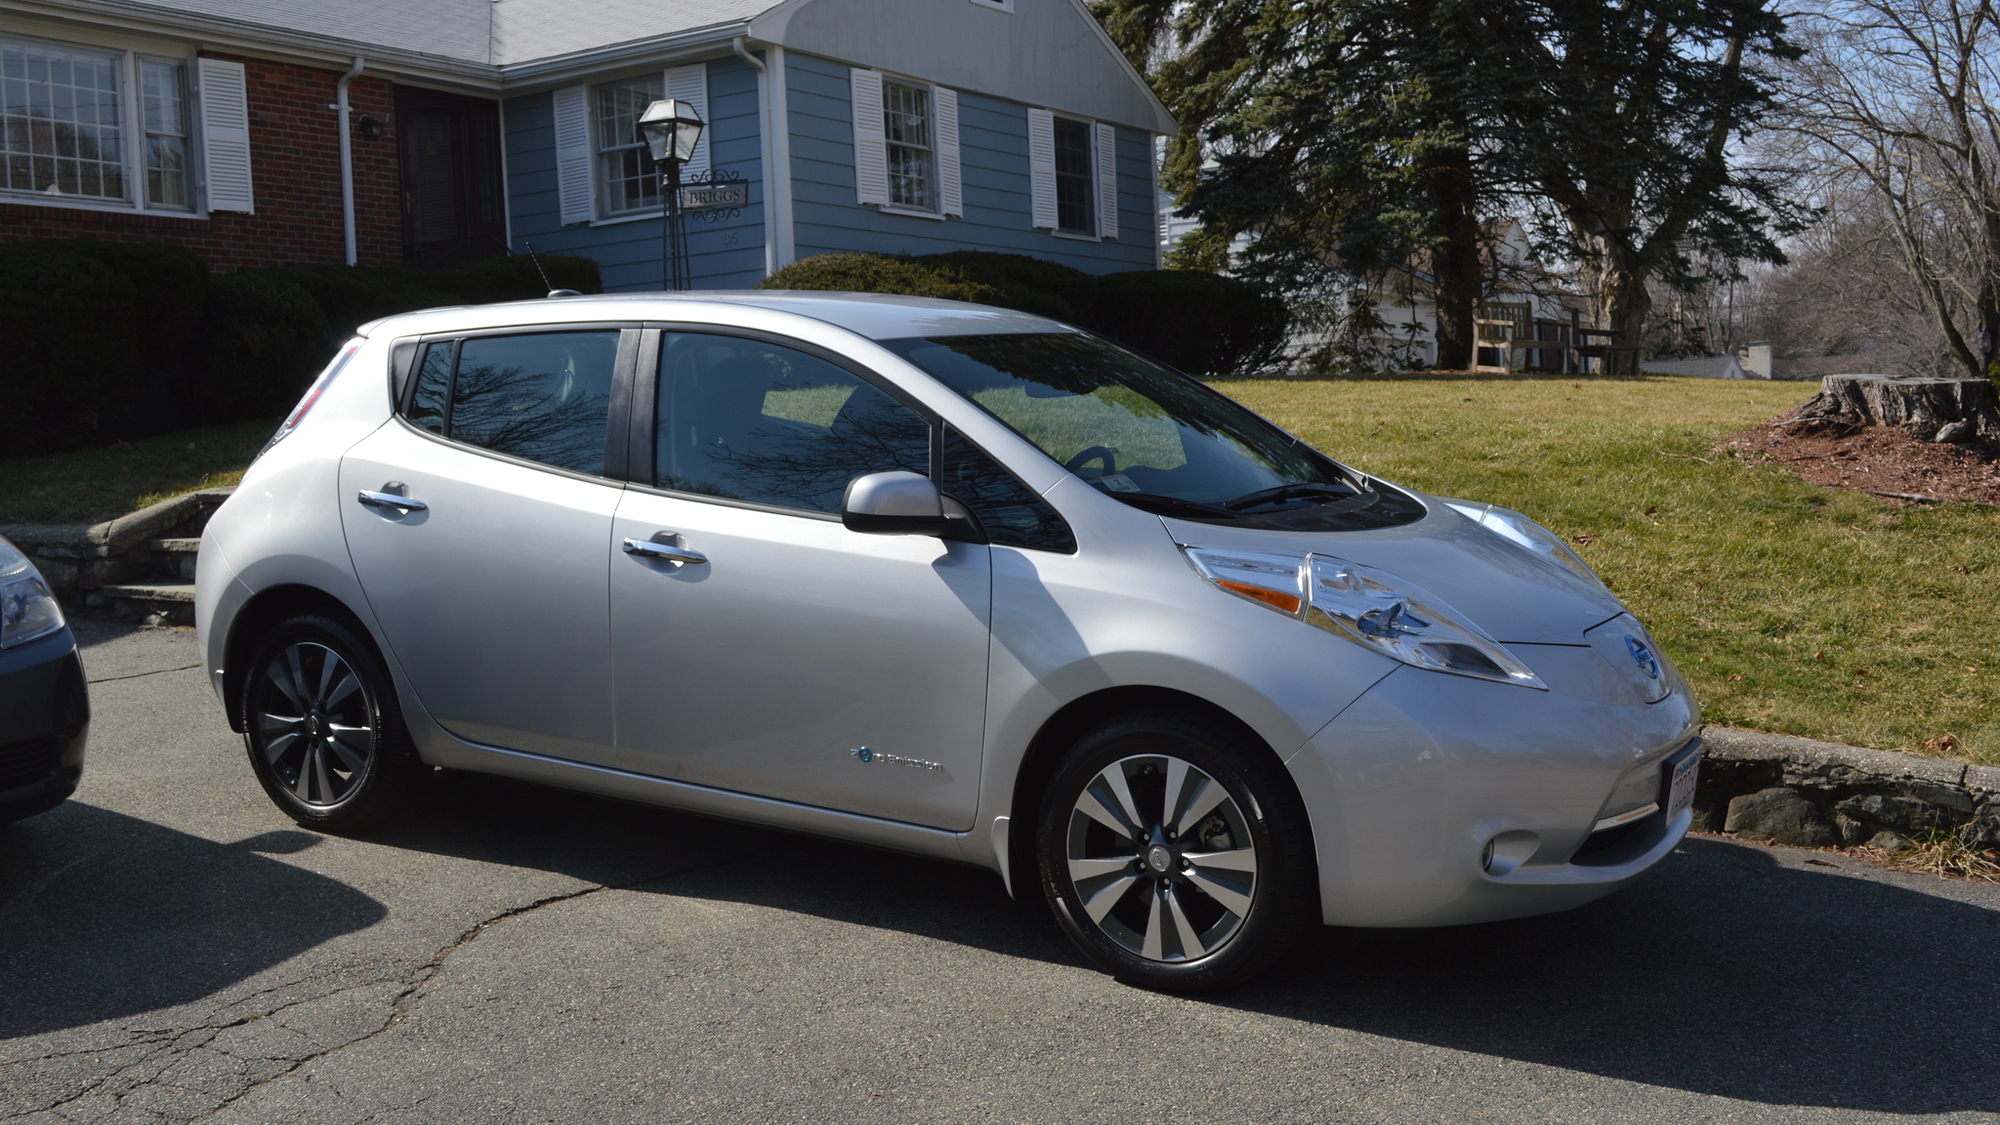 2015 Nissan Leaf outside home  [photo: John C. Briggs]